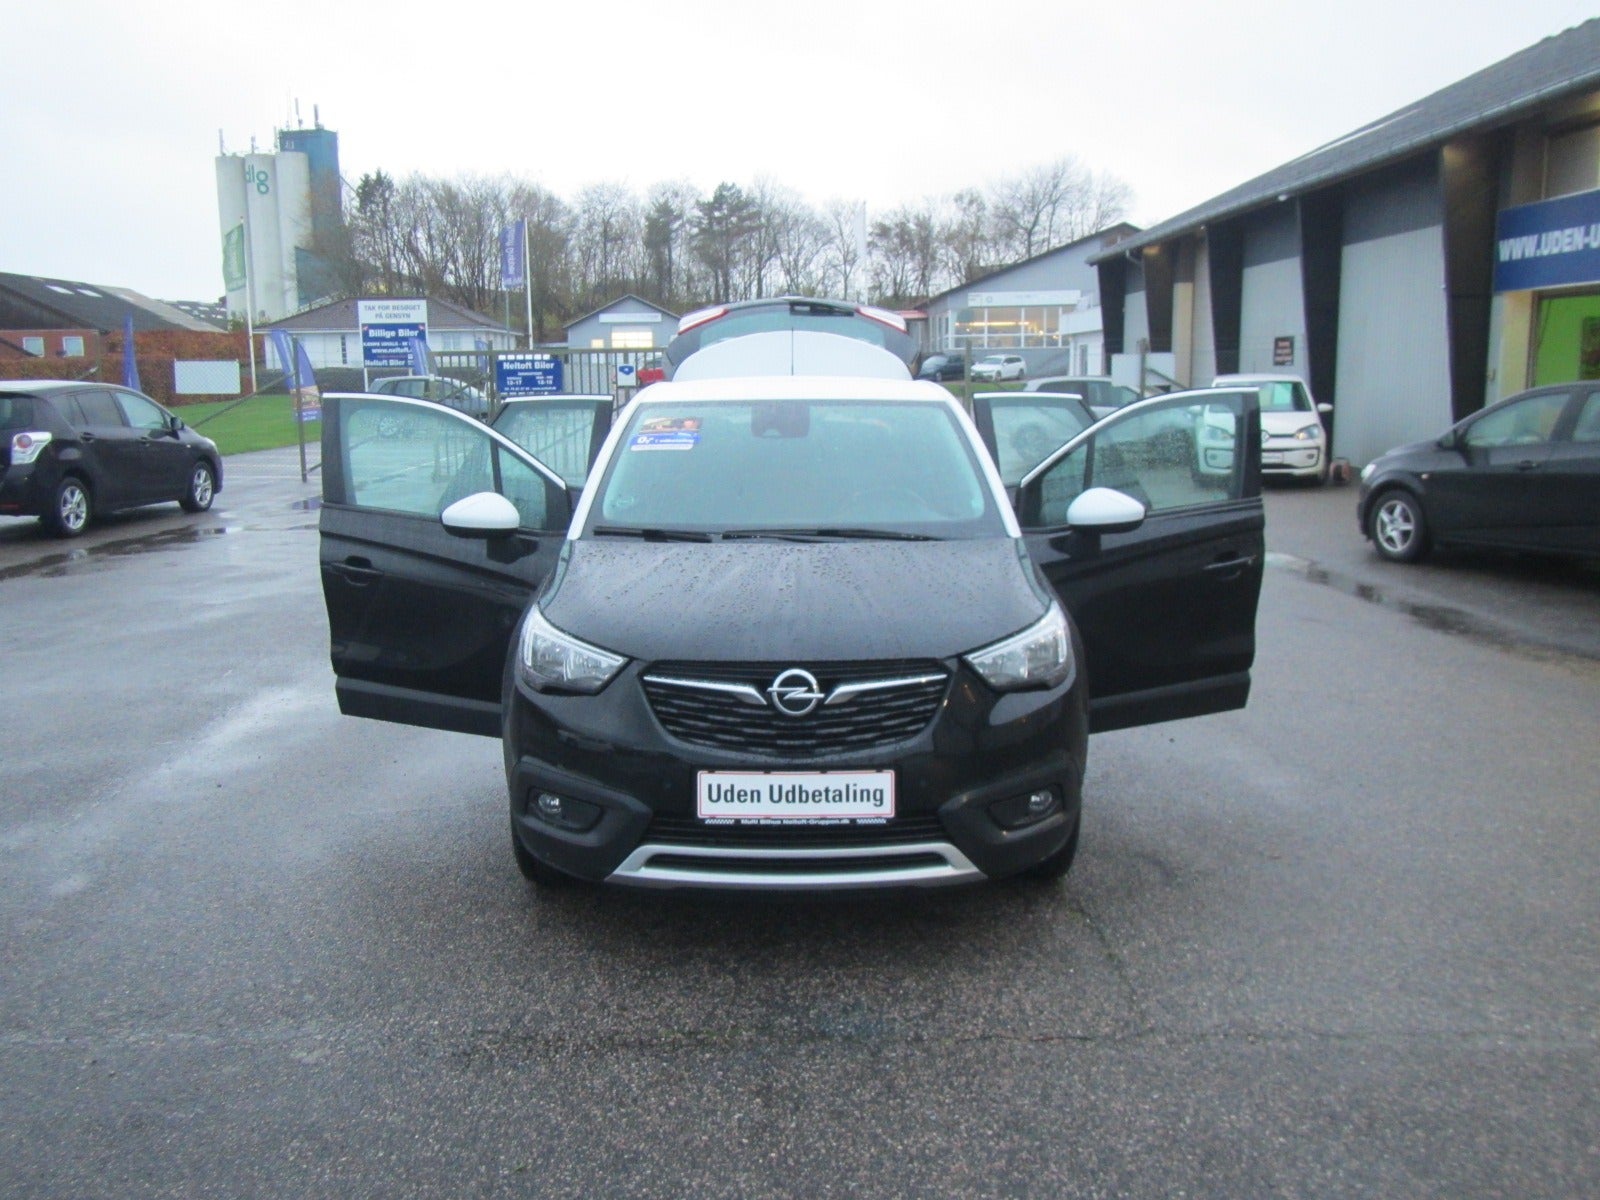 Billede af Opel Crossland X 1,6 CDTi 99 Innovation